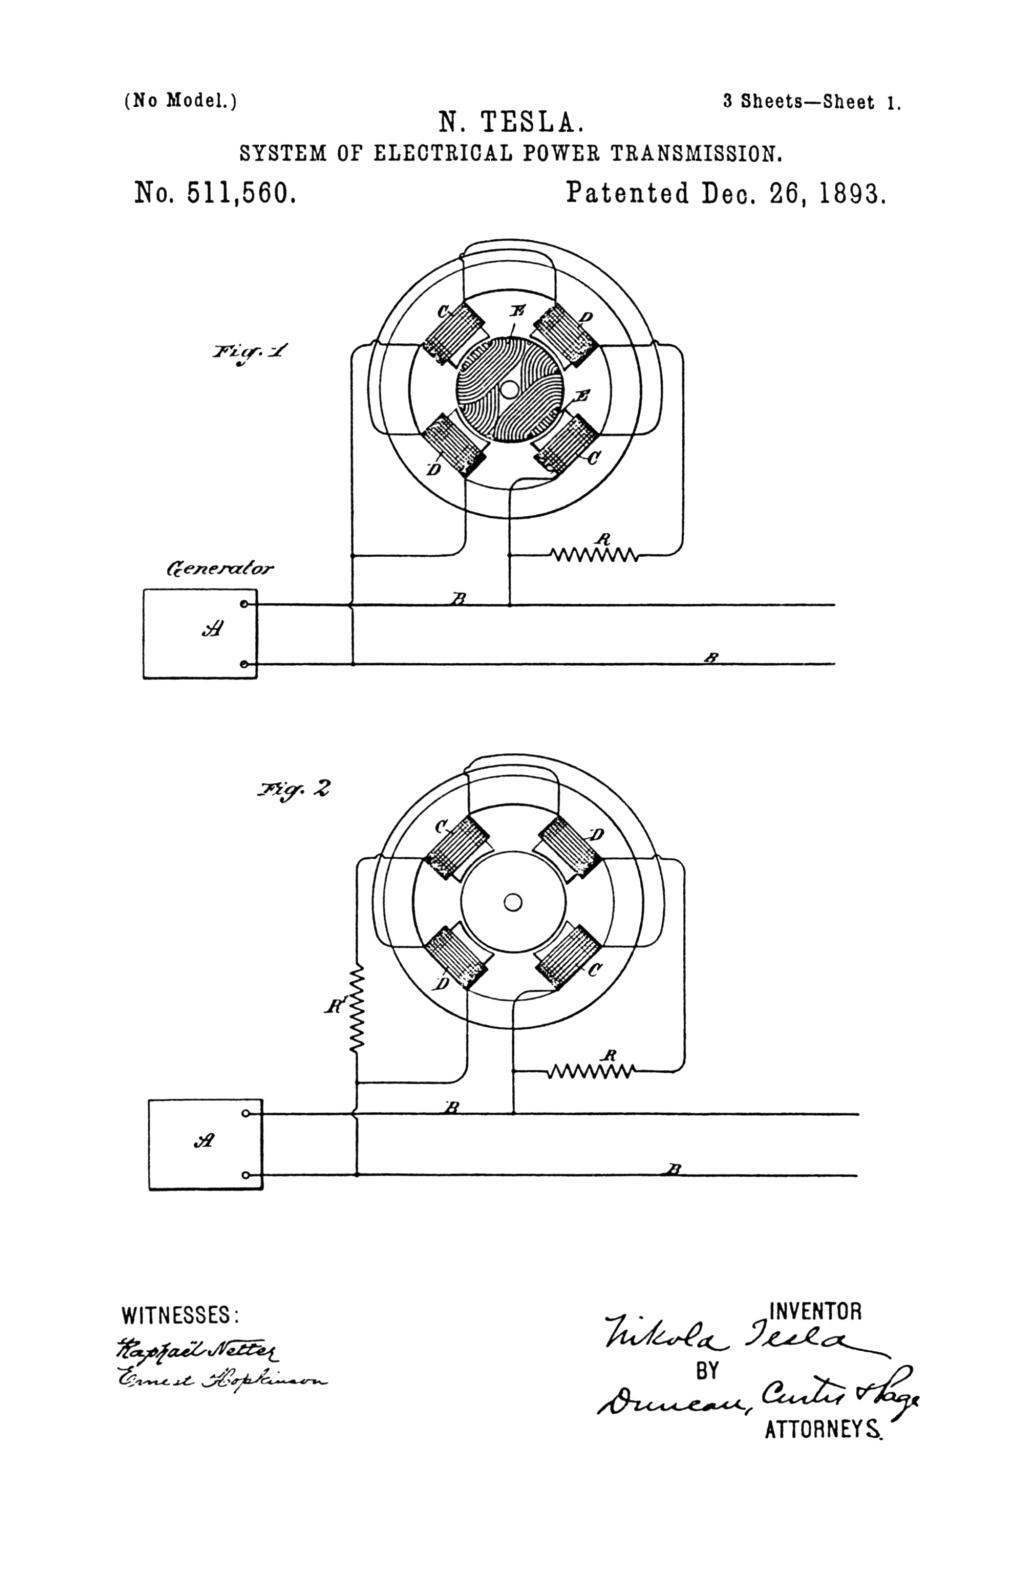 Nikola Tesla U.S. Patent 511,560 - System of Electrical Power Transmission - Image 1